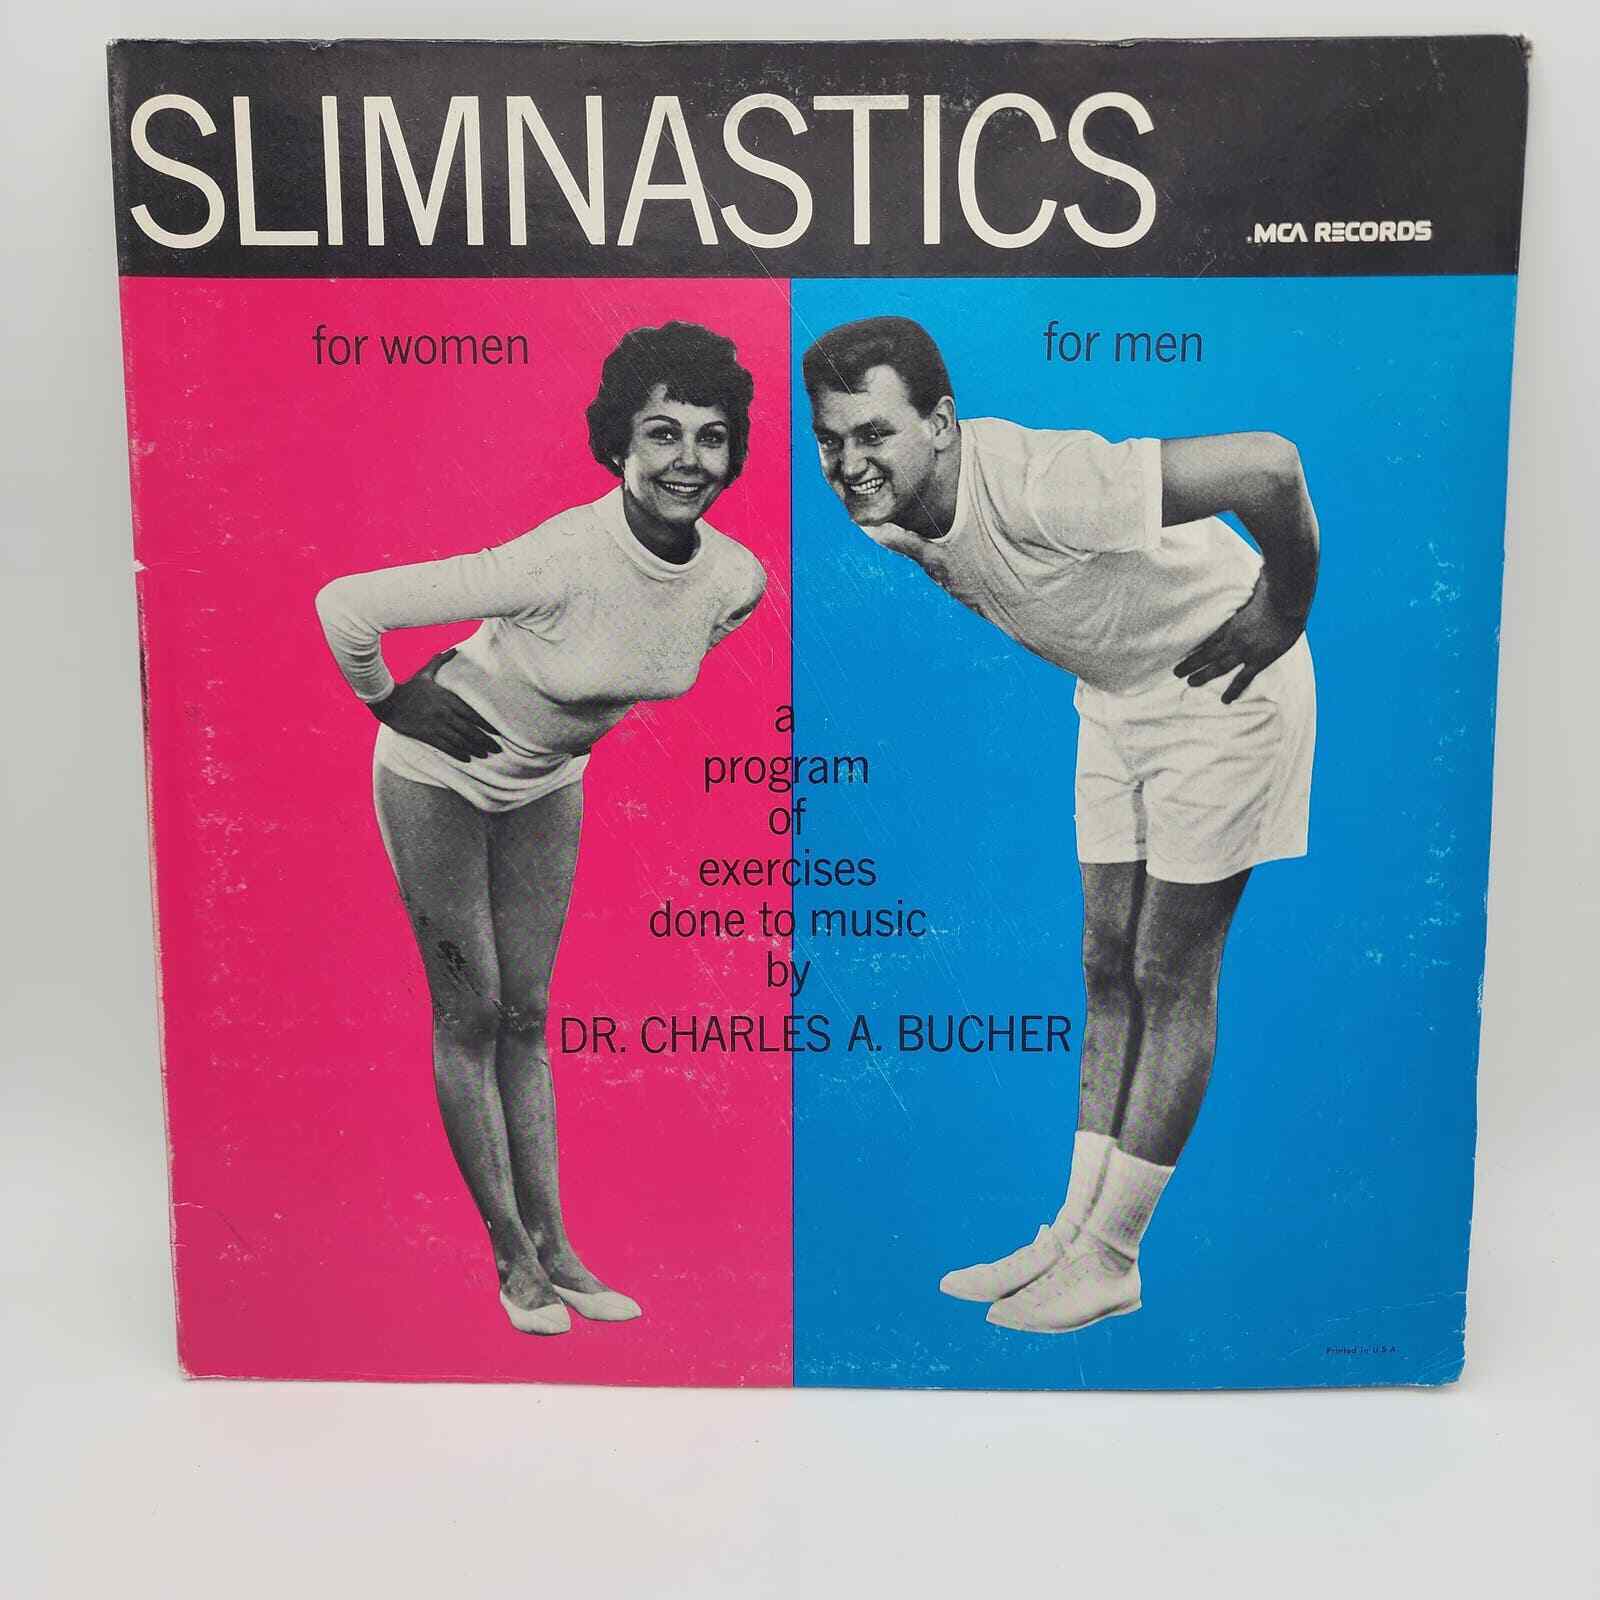 Vintage 1972 Slimnastics Vinyl Album Record Exercise Tips With Music MCA-2038